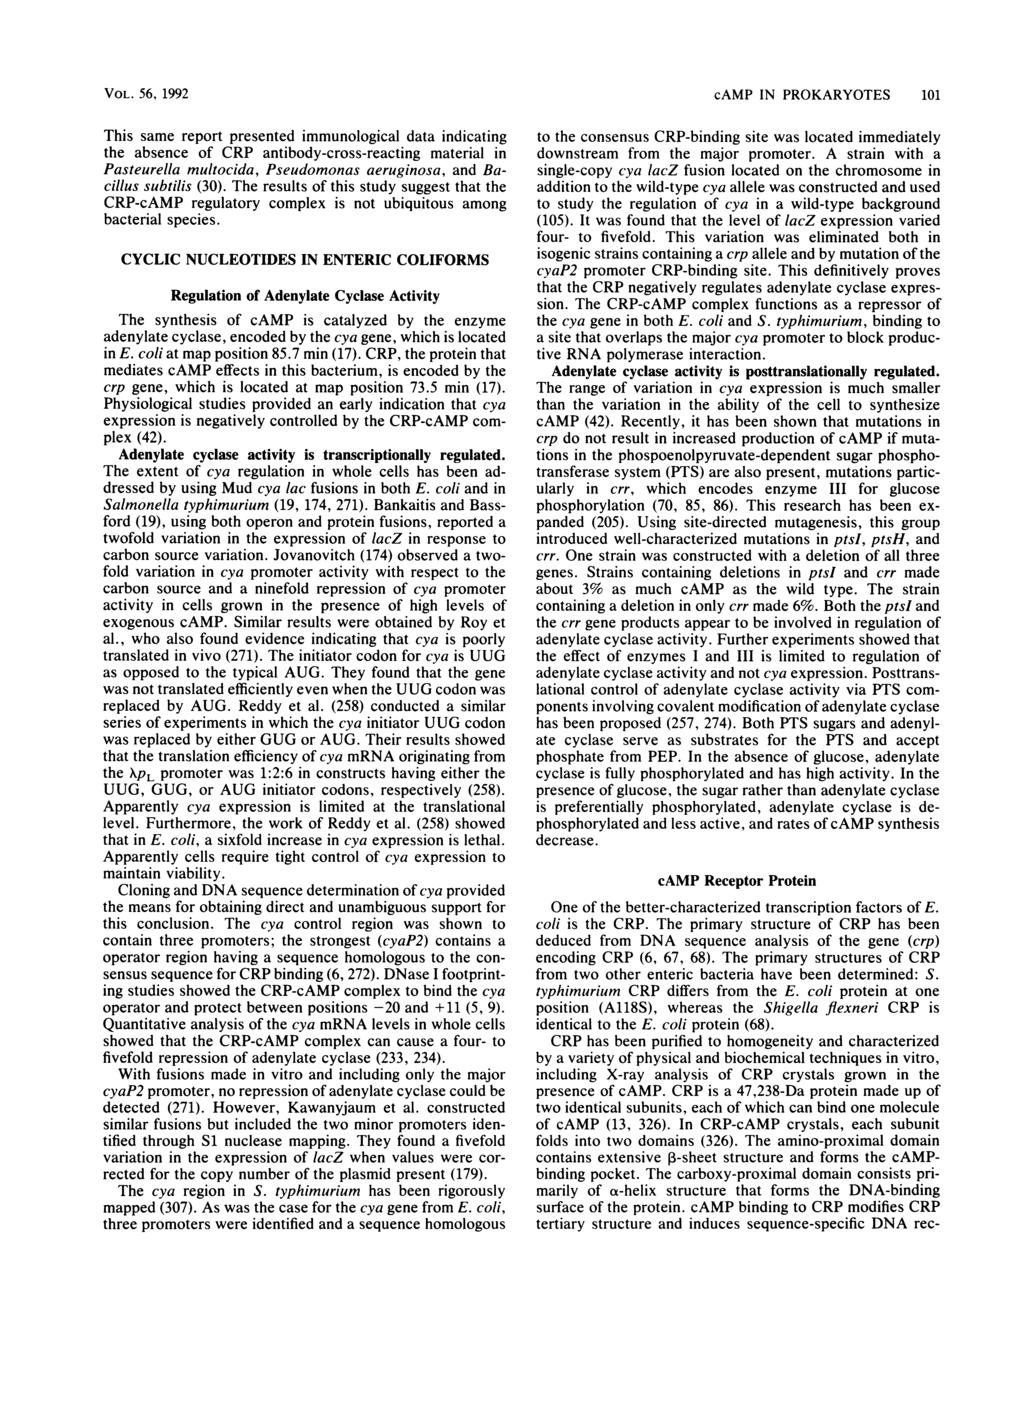 VOL. 56, 1992 This same report presented immunological data indicating the absence of CRP antibody-cross-reacting material in Pasteurella multocida, Pseudomonas aeruginosa, and Bacillus subtilis (30).